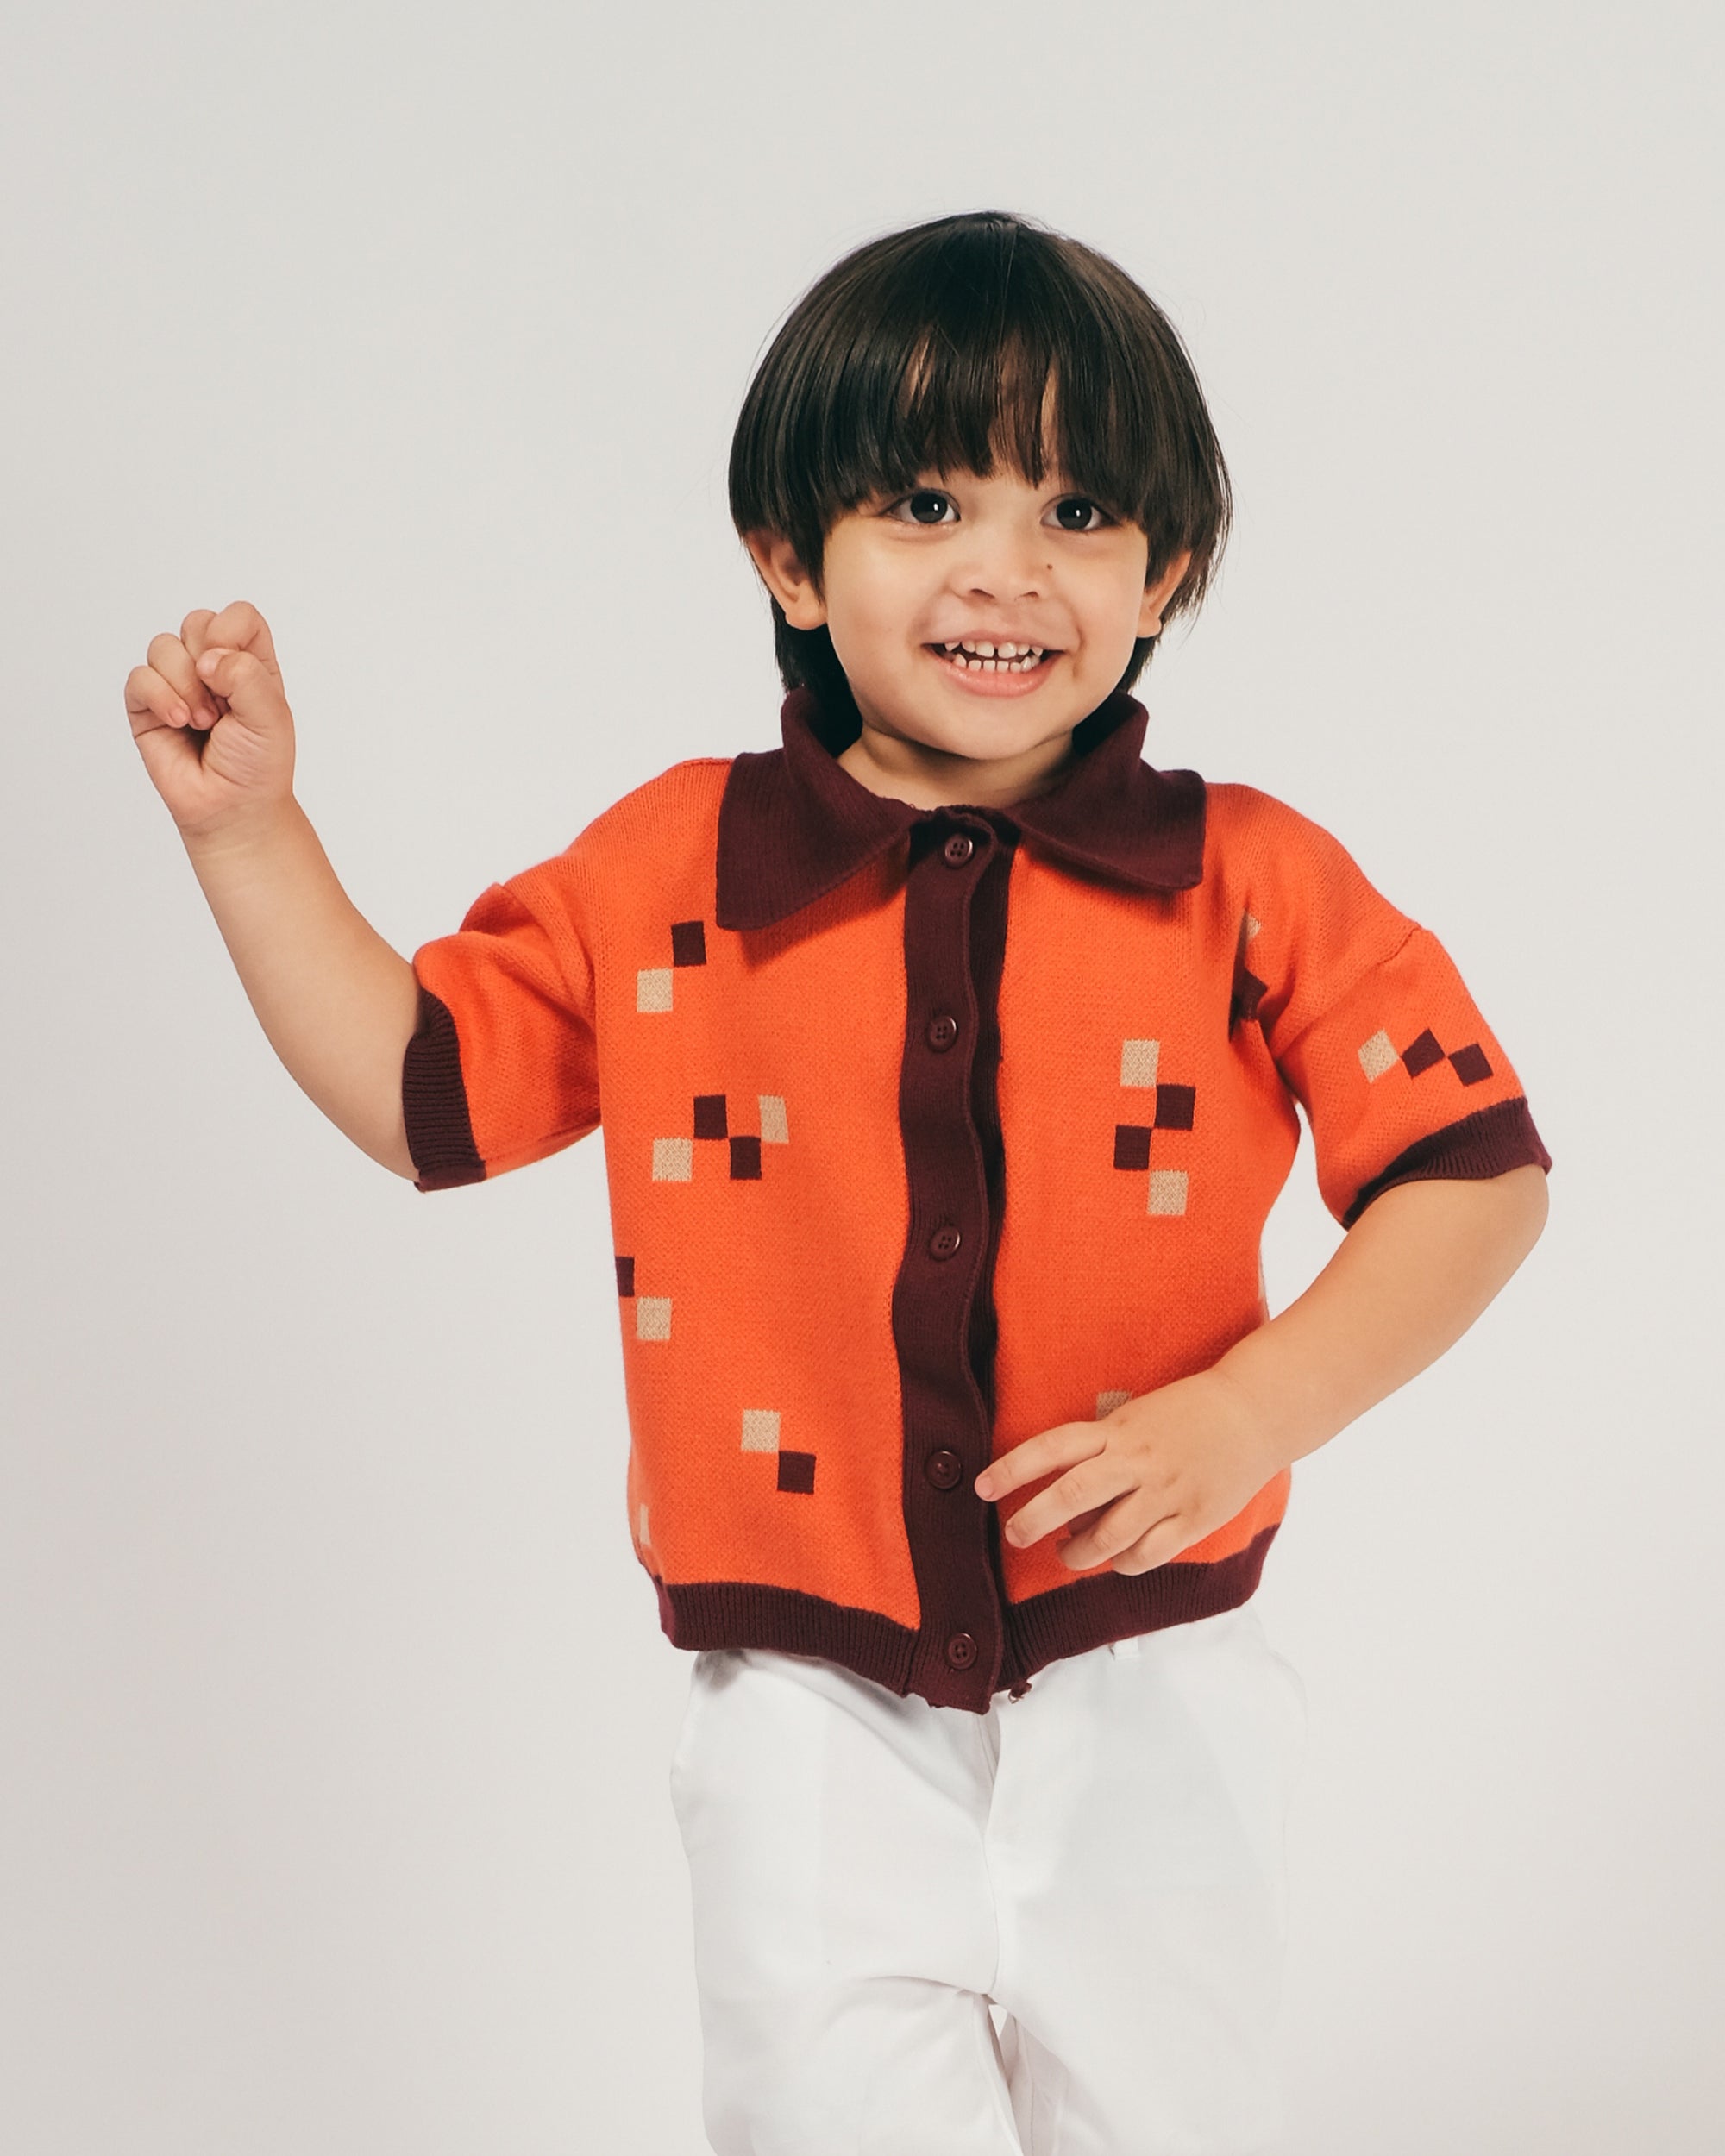 Booyah Baby & Kids Zayn Knit Polo Shirt